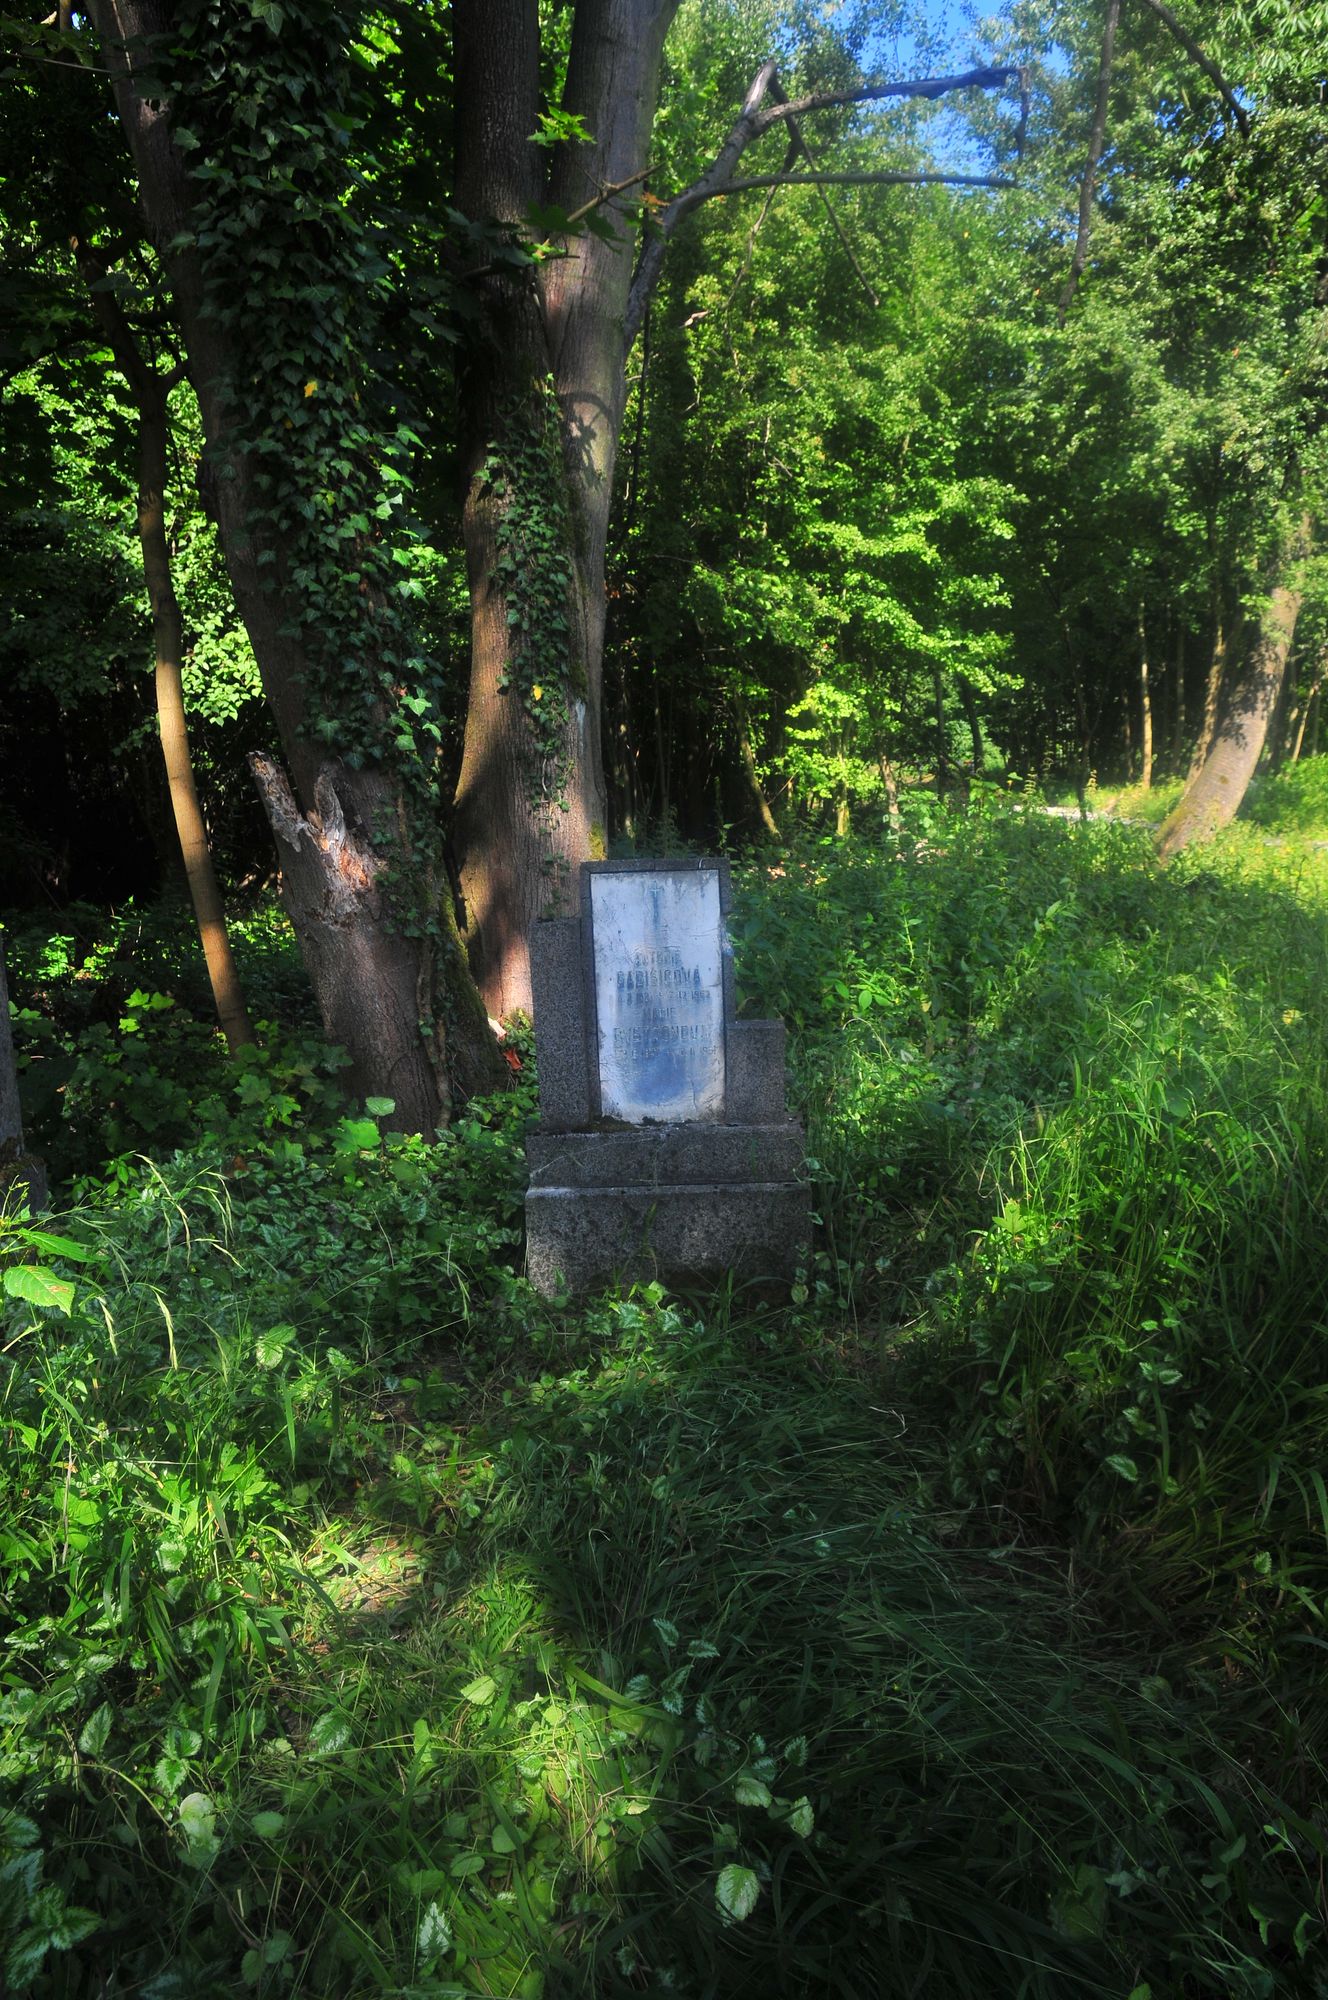 Tombstone of Antonie Radisicová, and Marie Bystronová